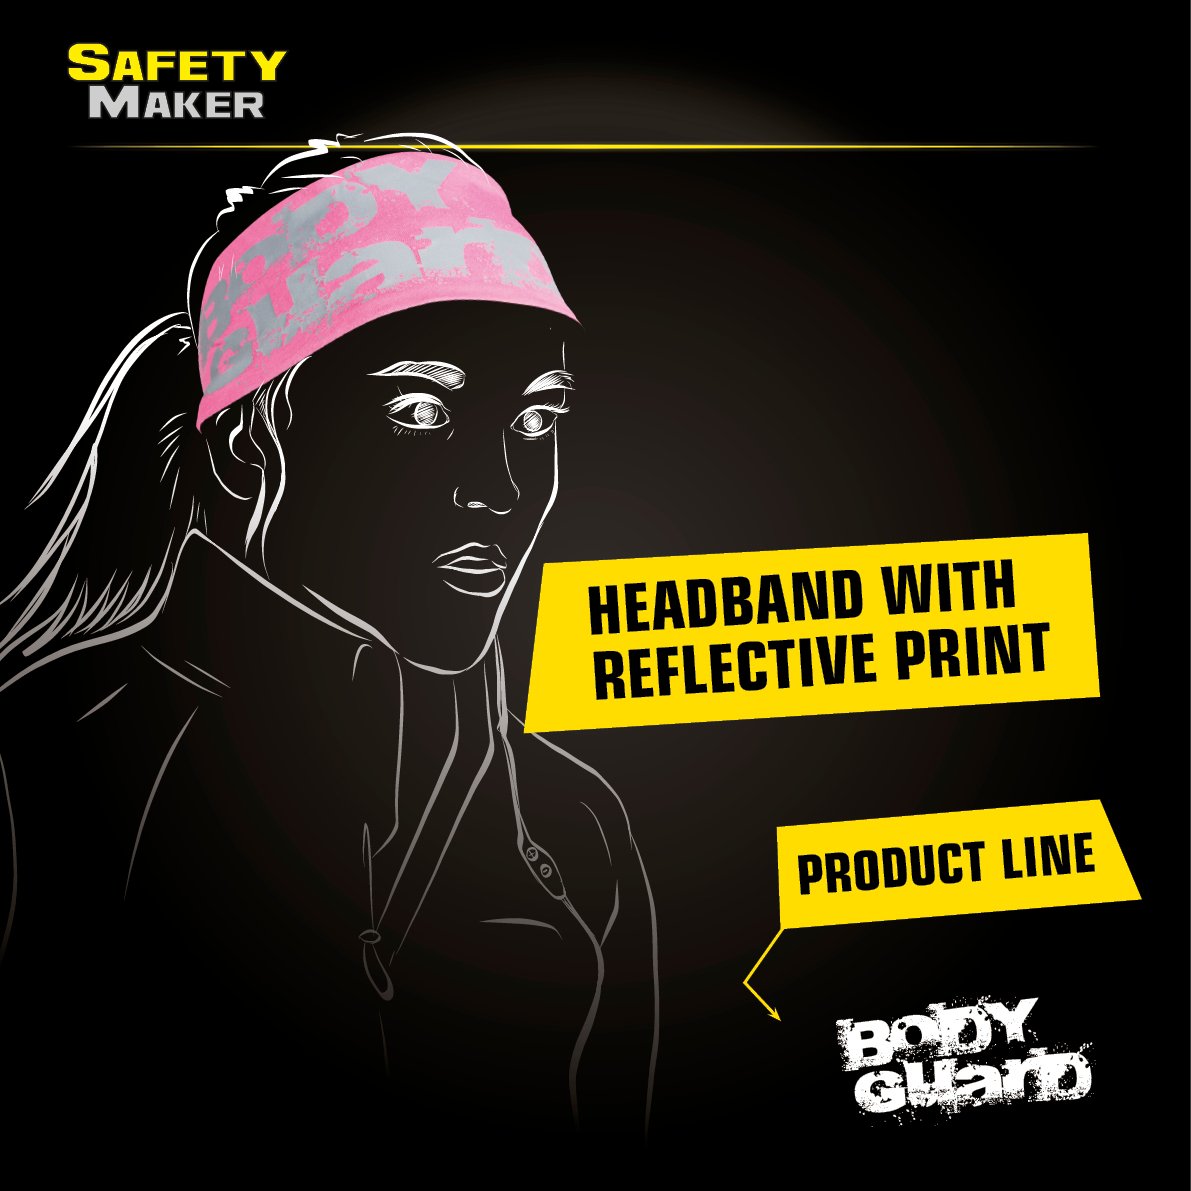 Reversible headband pink-silver